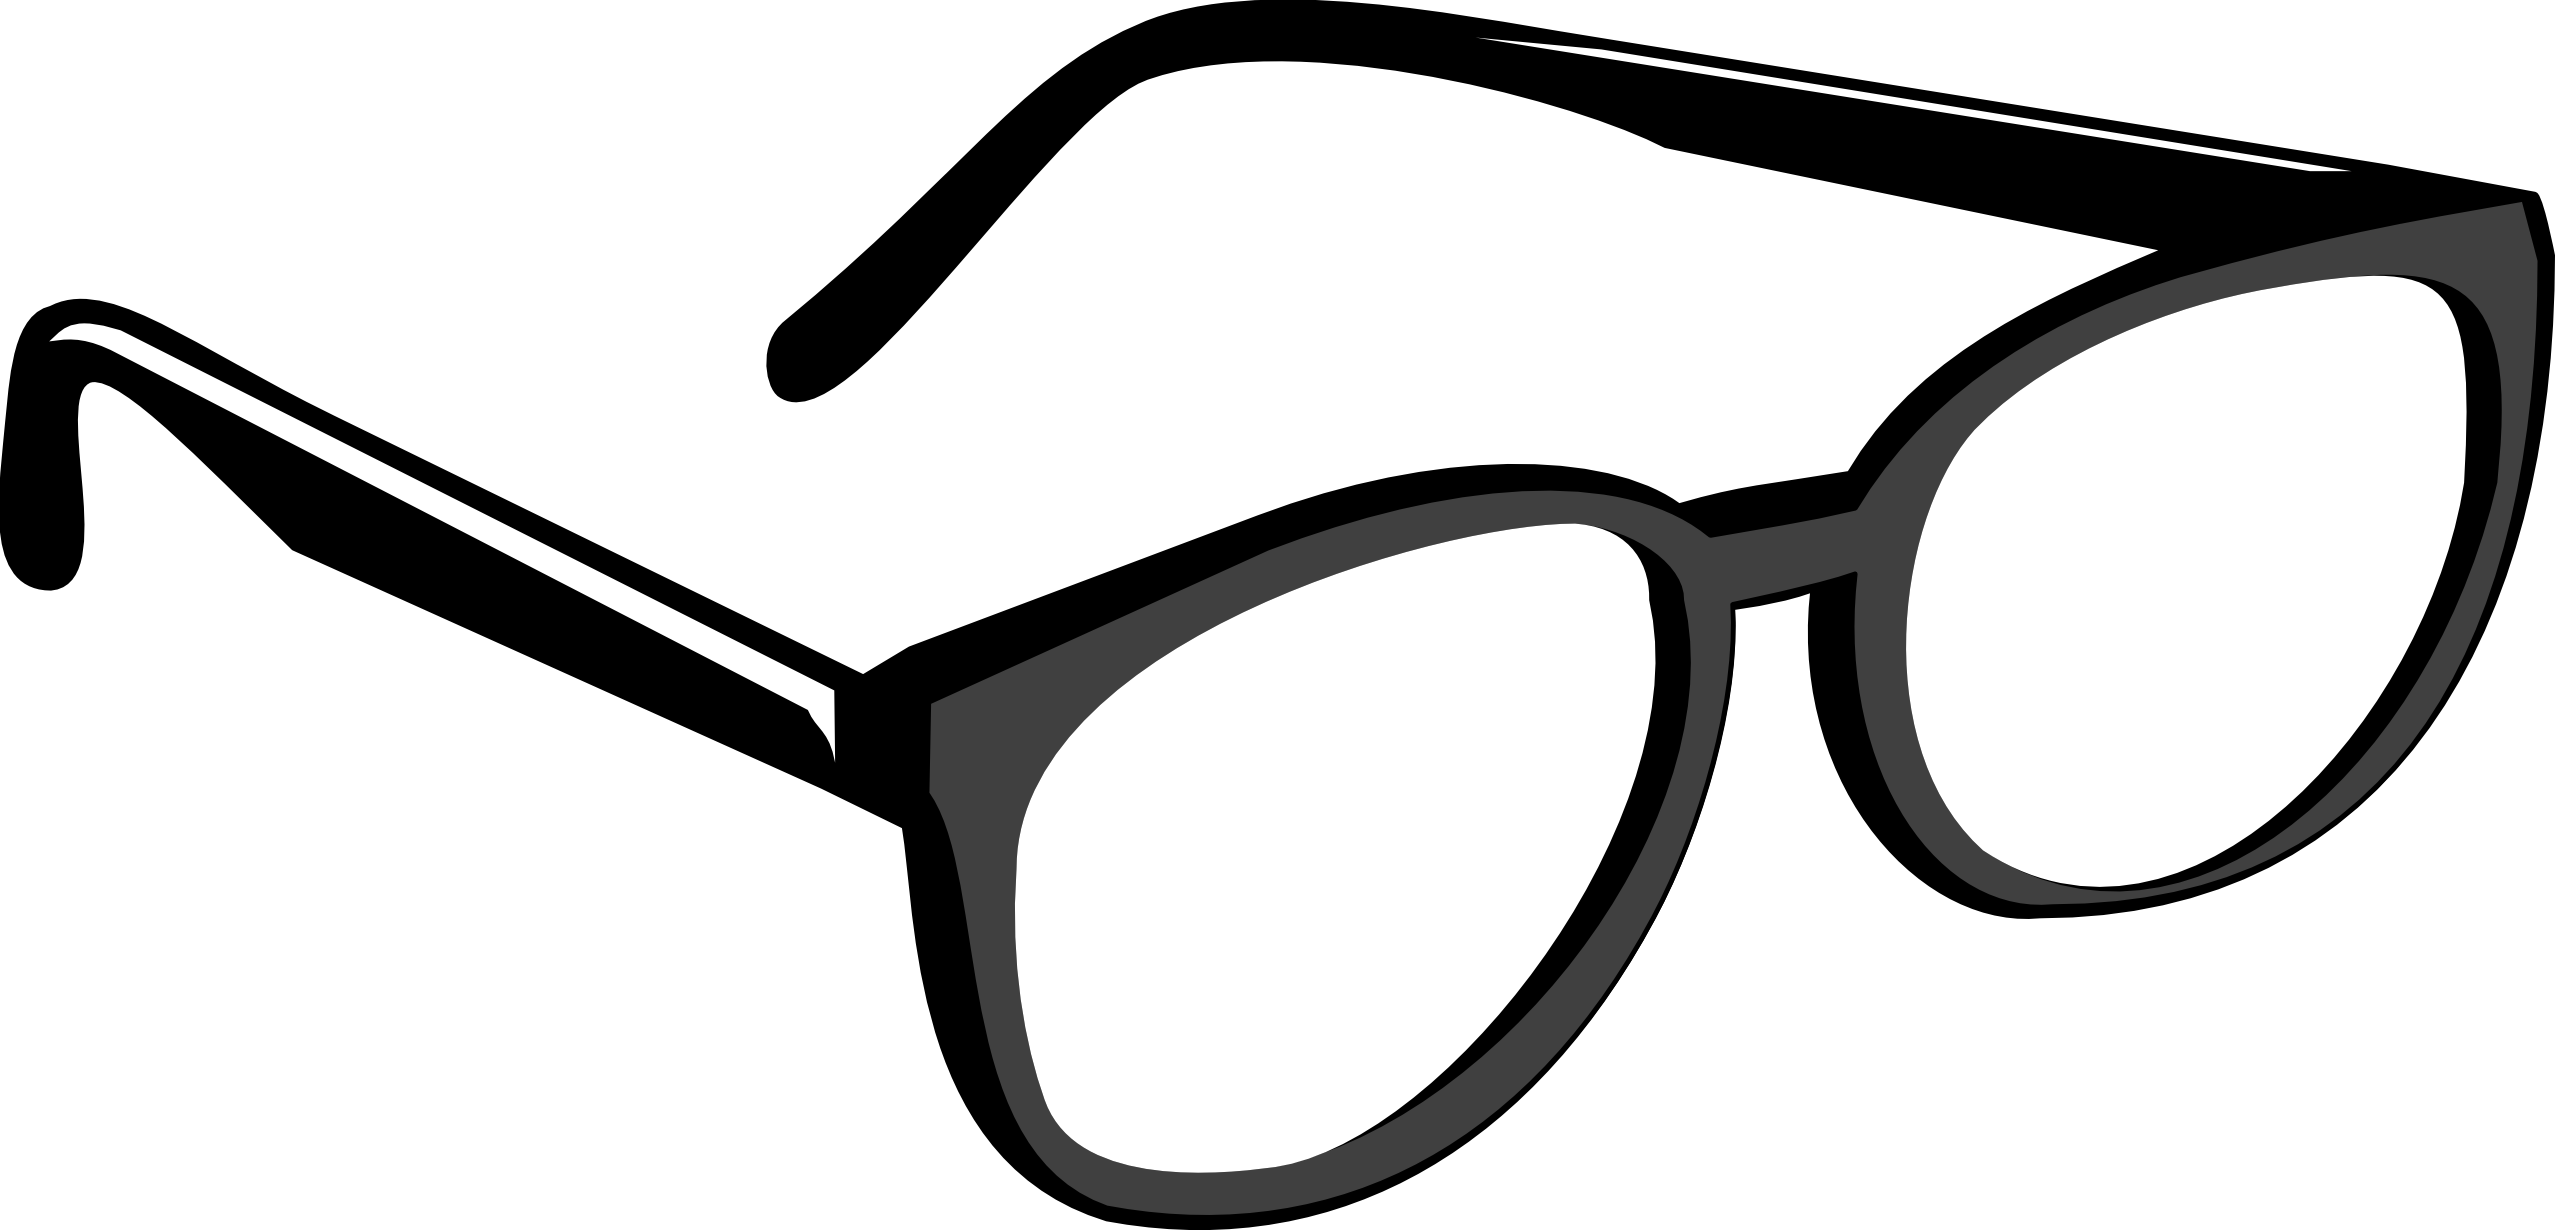 Free sunglasses clip art free - Sunglass Clip Art